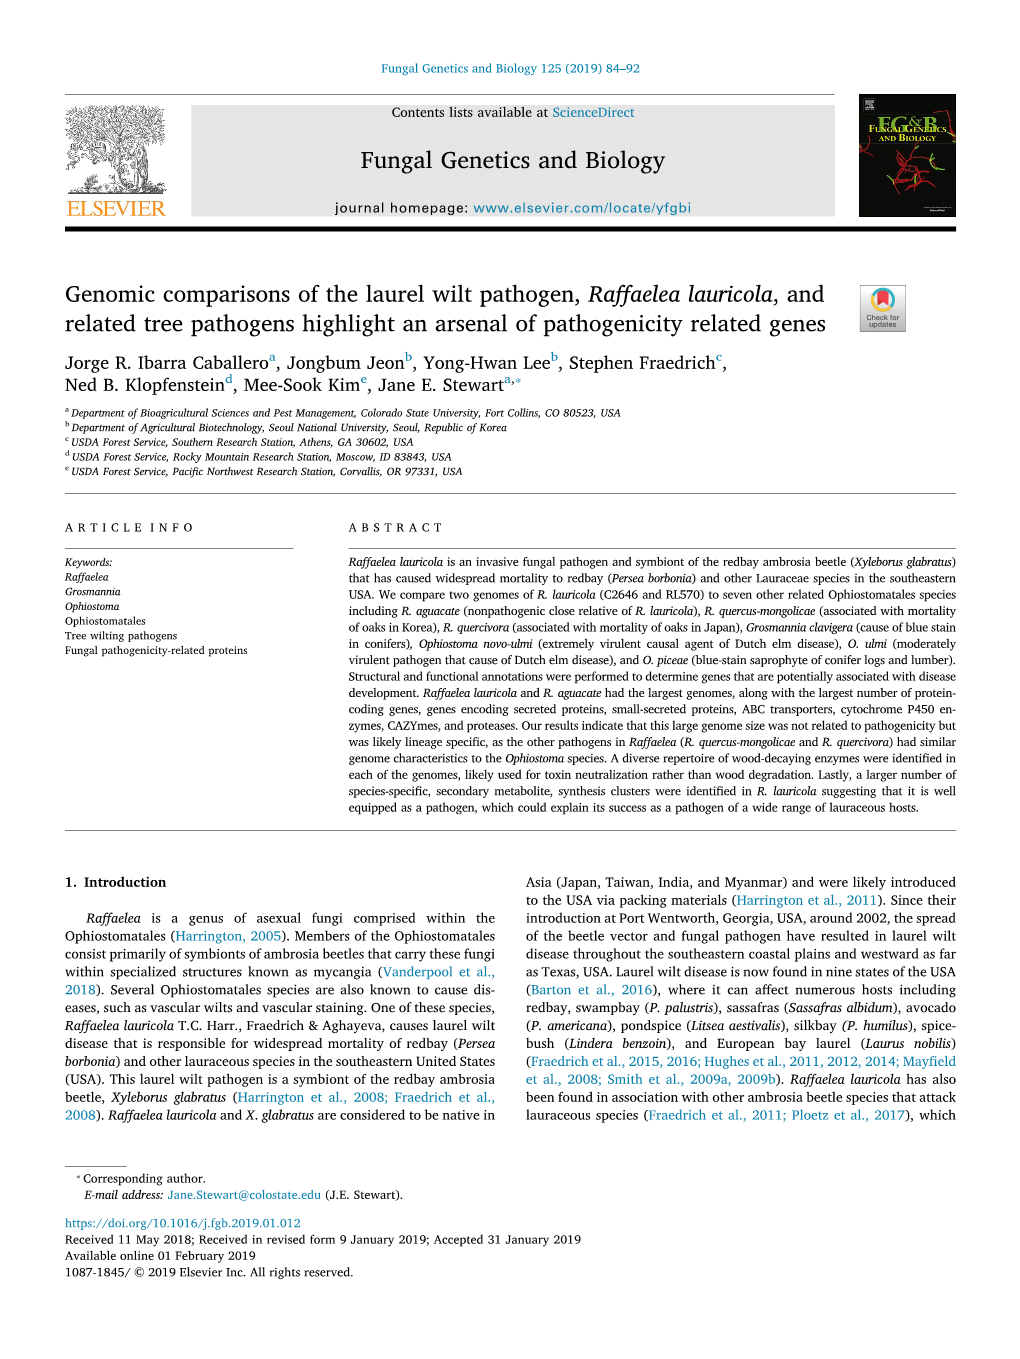 Genomic Comparisons of the Laurel Wilt Pathogen, Raffaelea Lauricola, and T Related Tree Pathogens Highlight an Arsenal of Pathogenicity Related Genes Jorge R